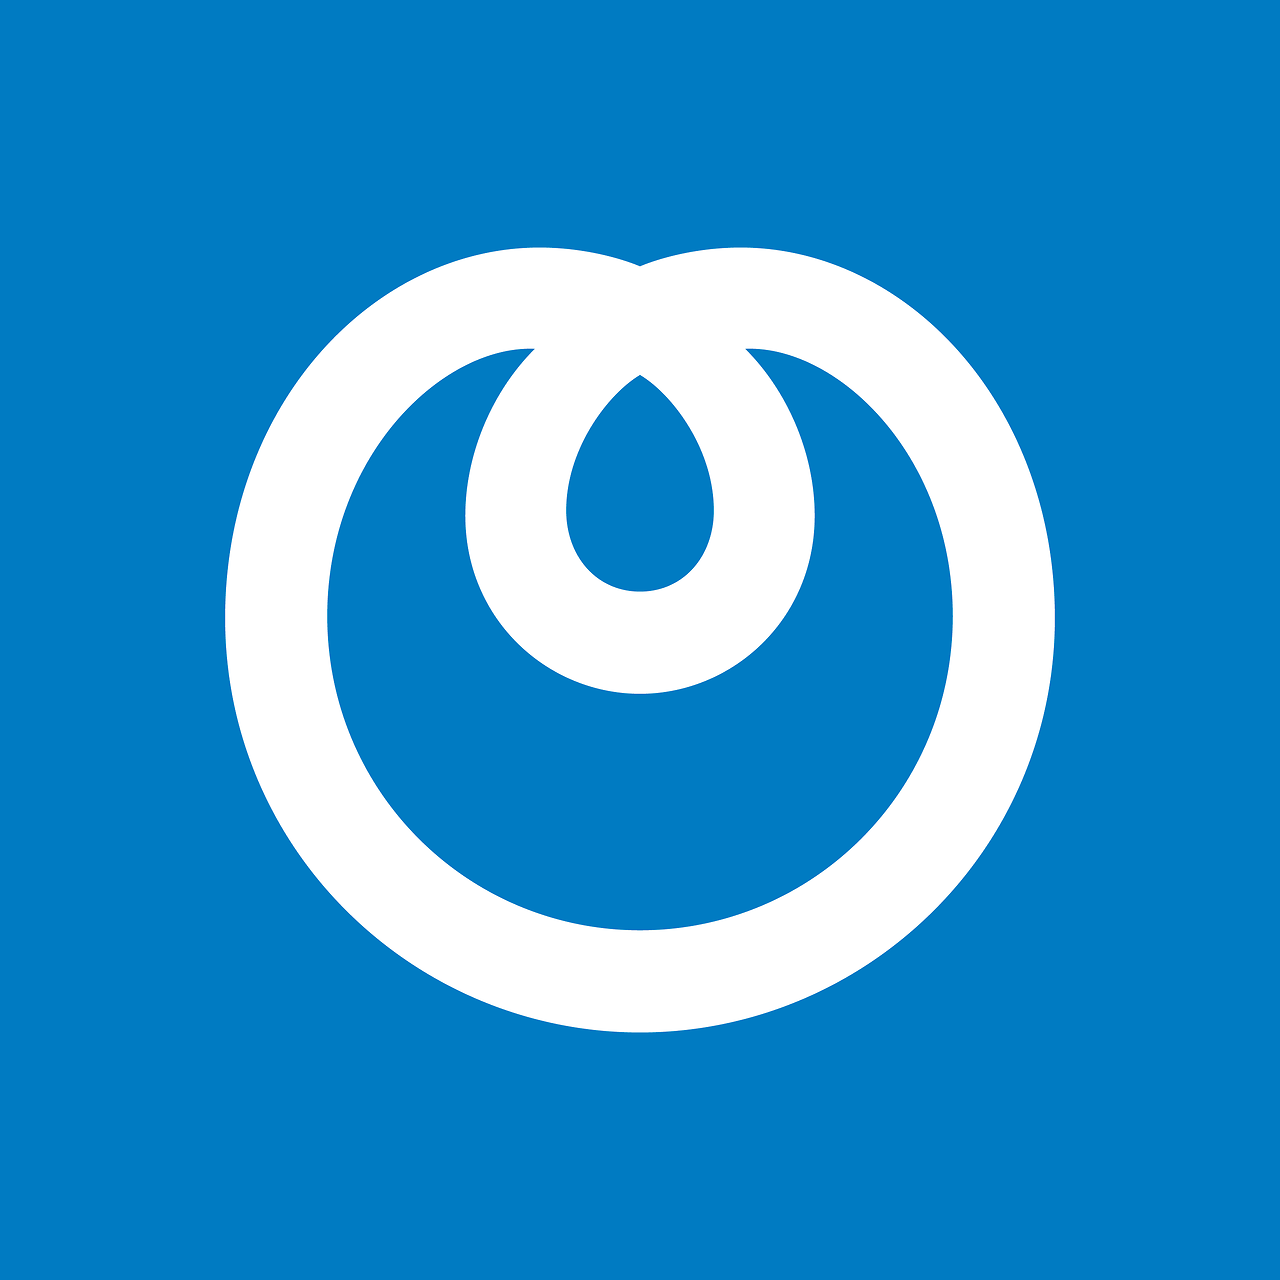 NTT Logo - Nippon Telegraph and Telephone NTT Group